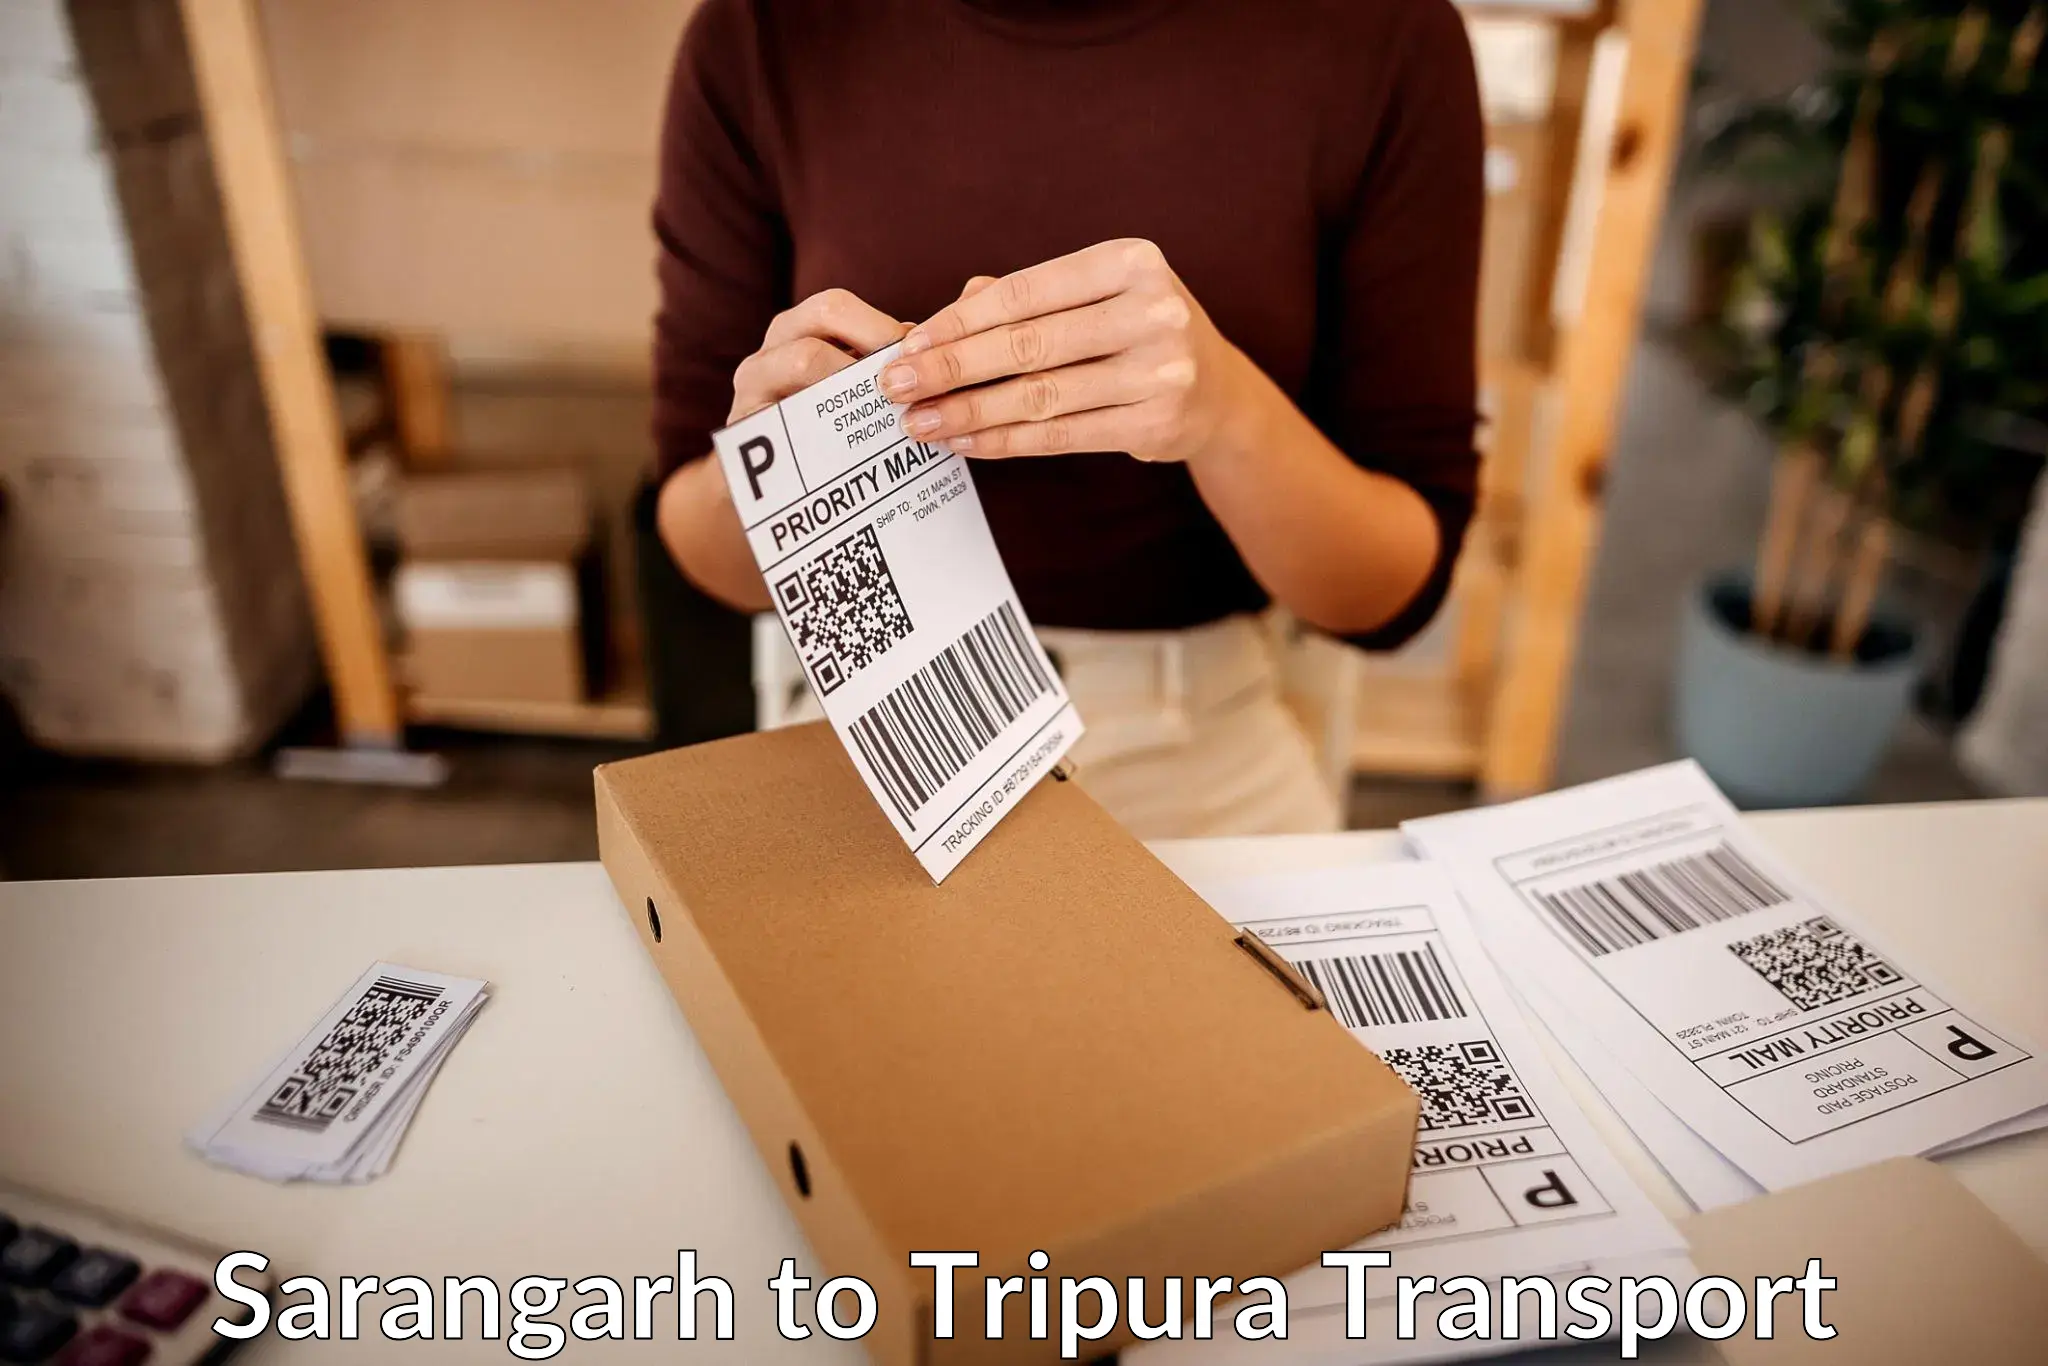 Transport in sharing Sarangarh to Tripura